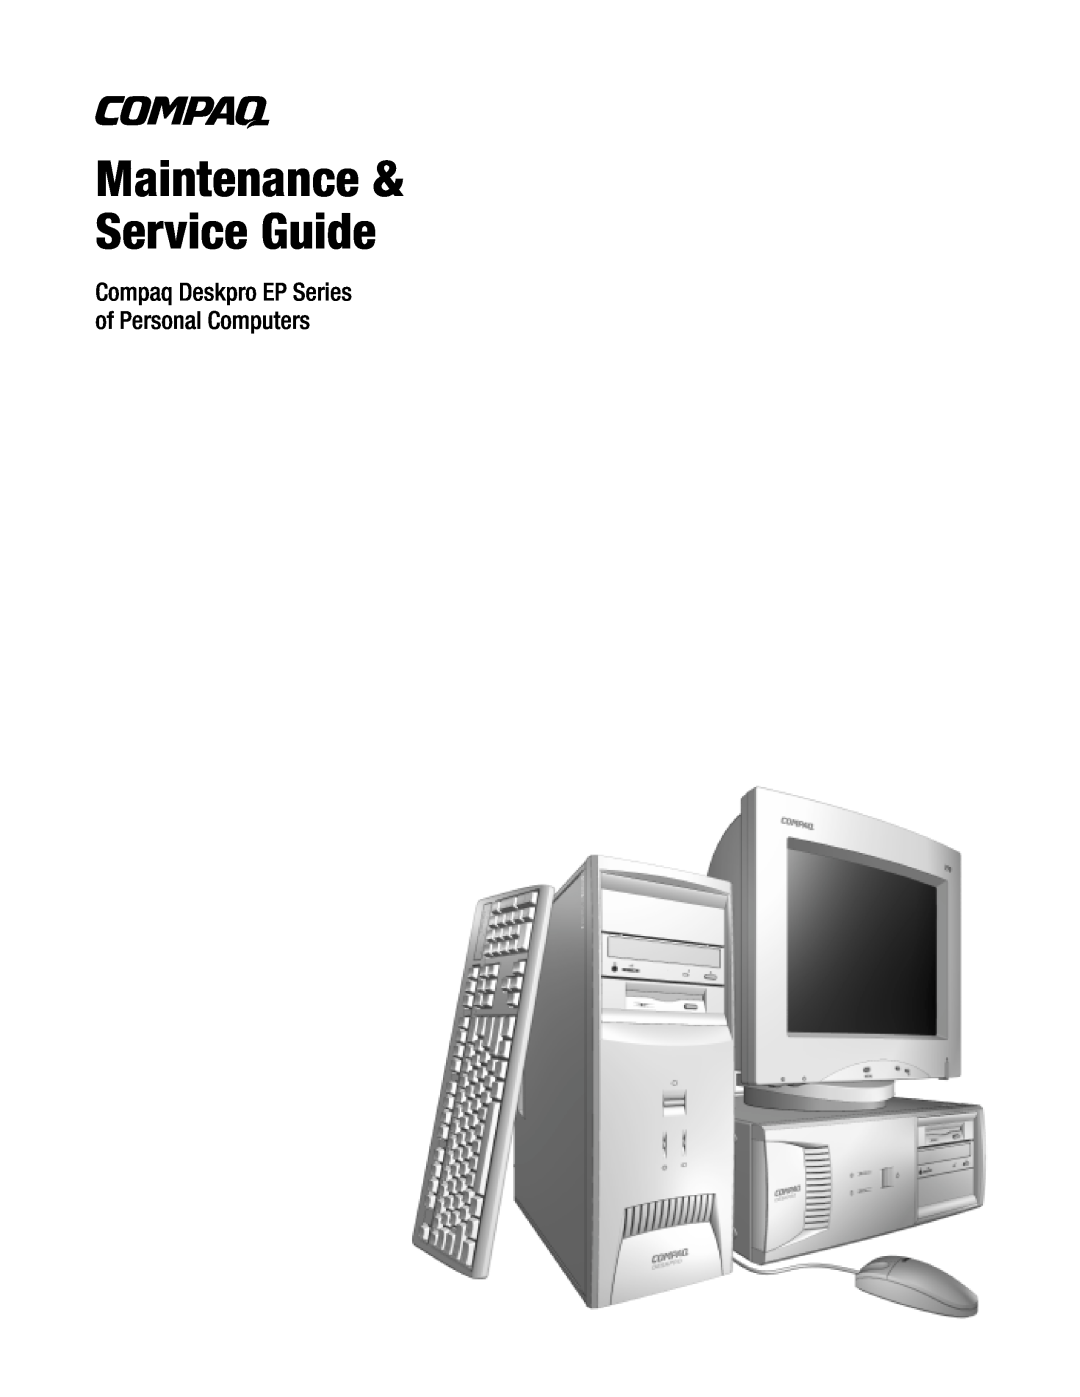 Compaq manual Maintenance & Service Guide, Compaq Deskpro EP Series of Personal Computers 